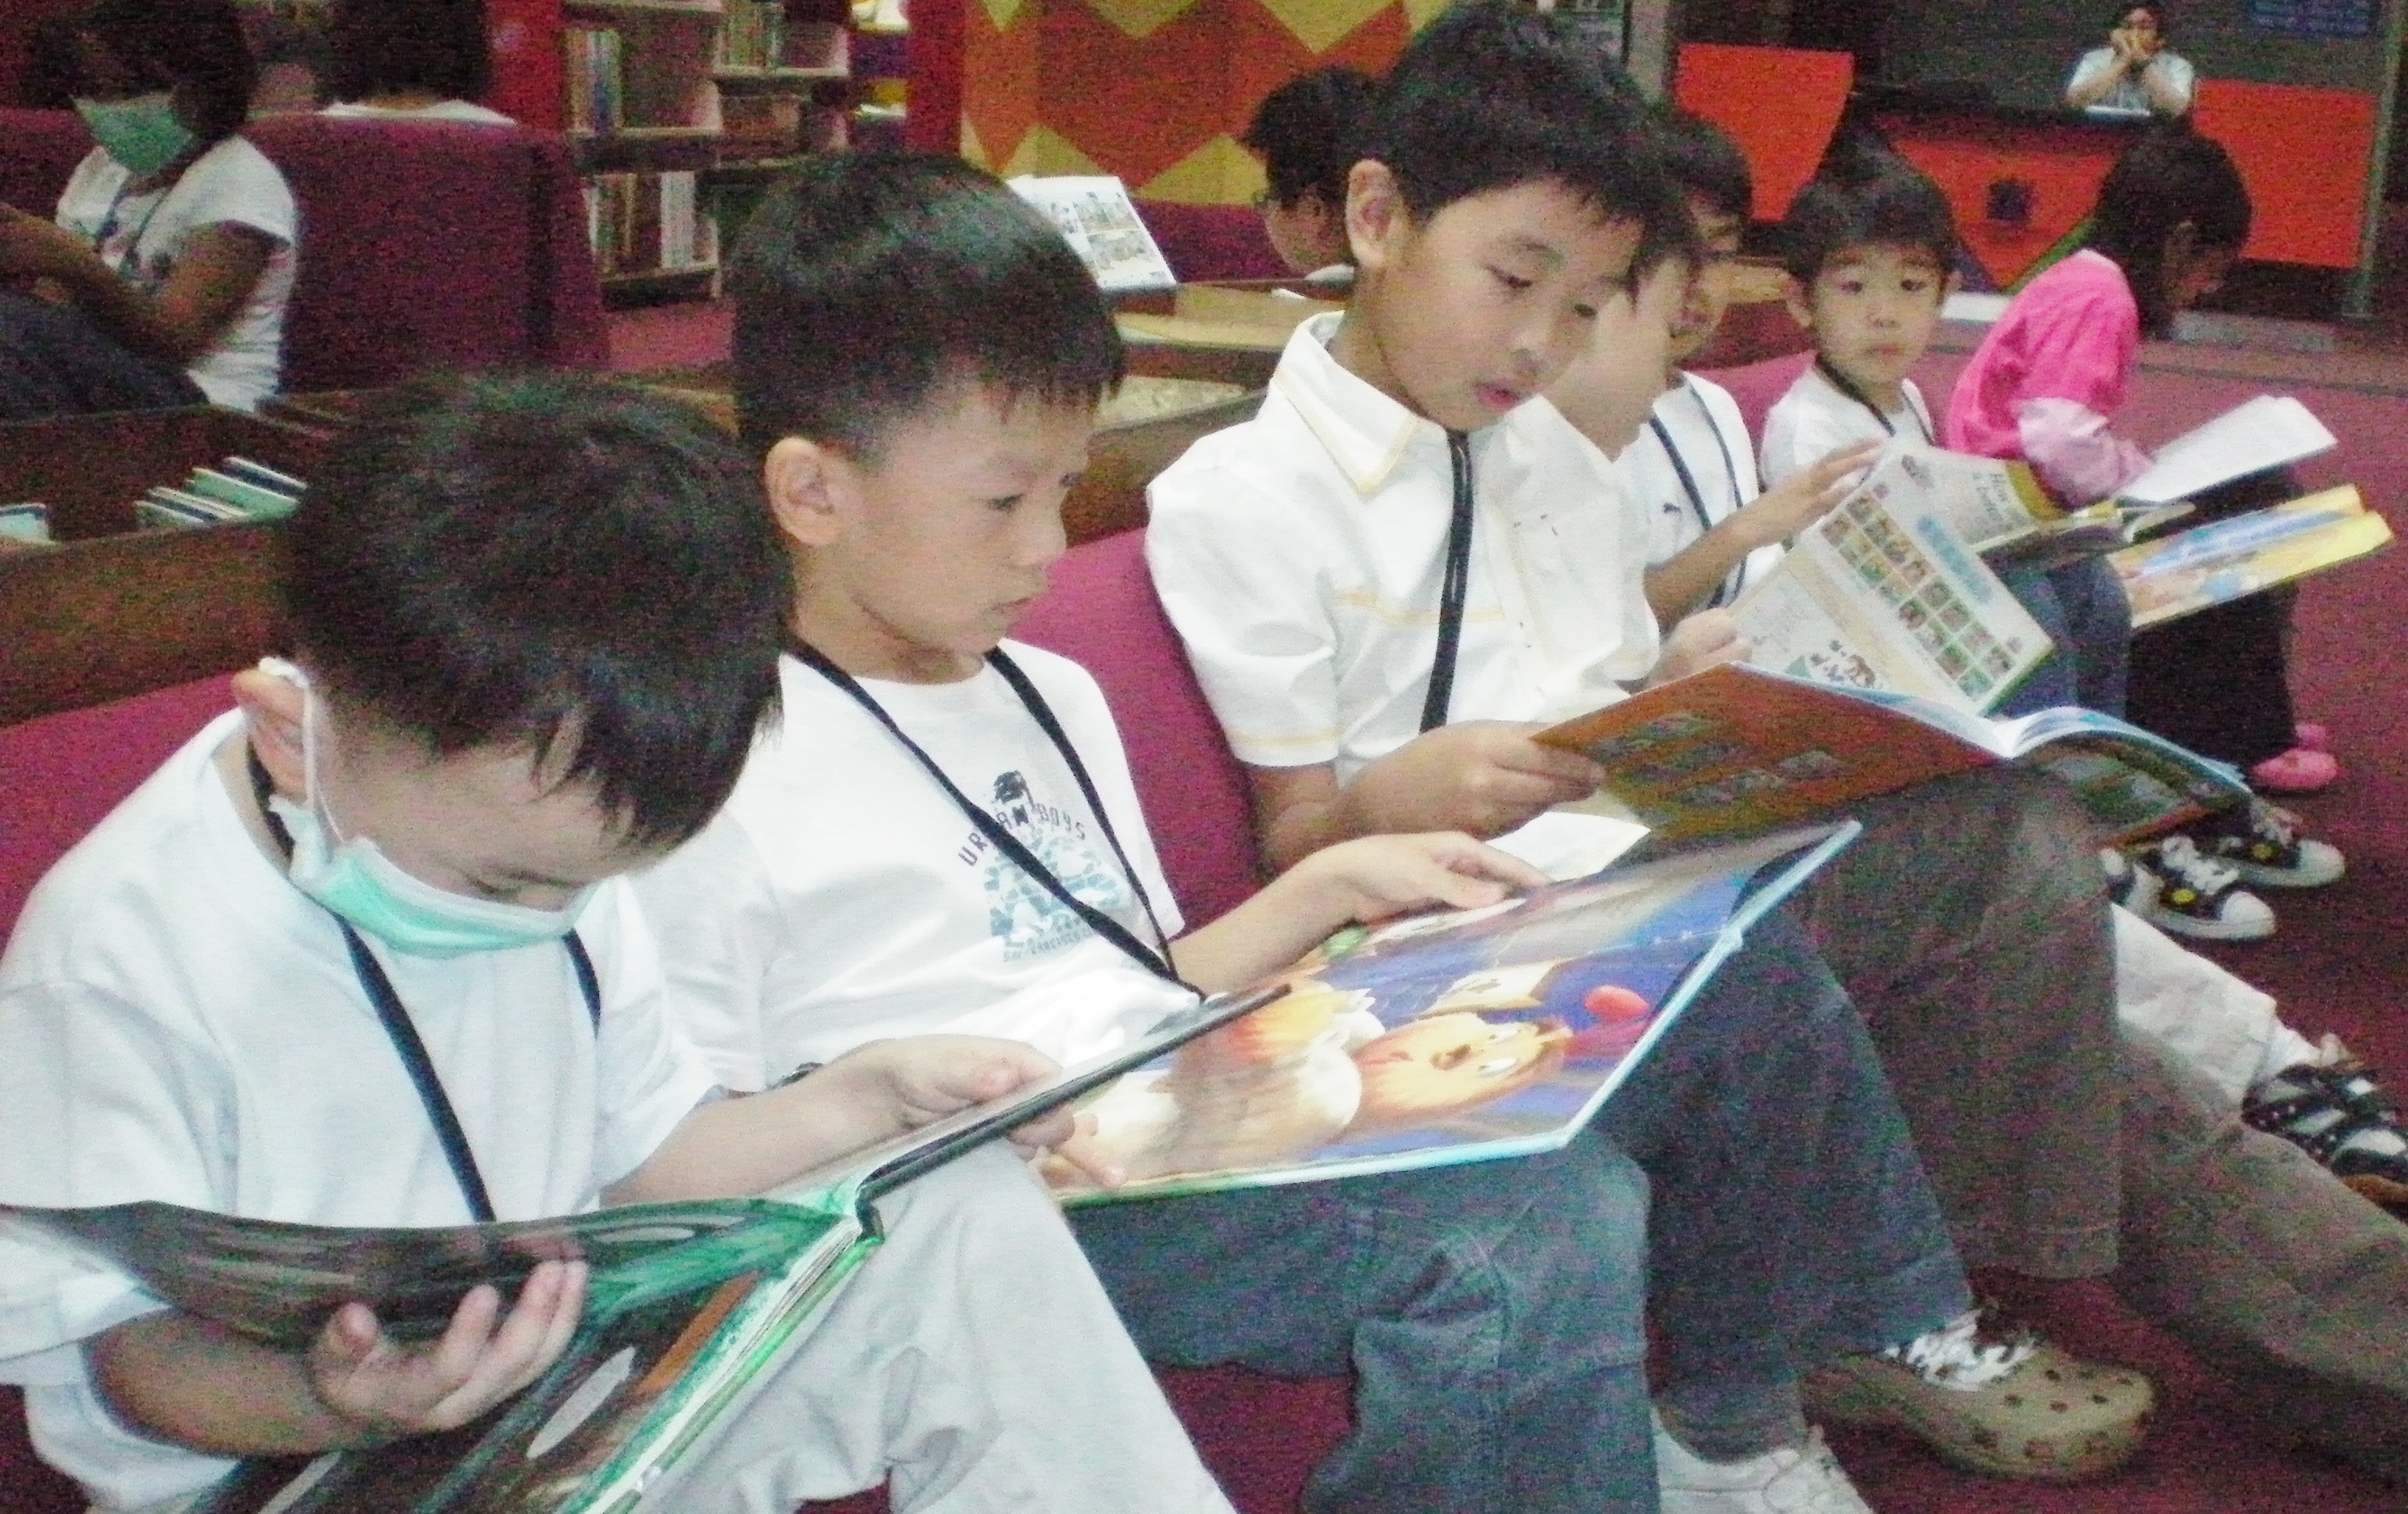 Scholar Base Launches Fun Reading Initiative For Children